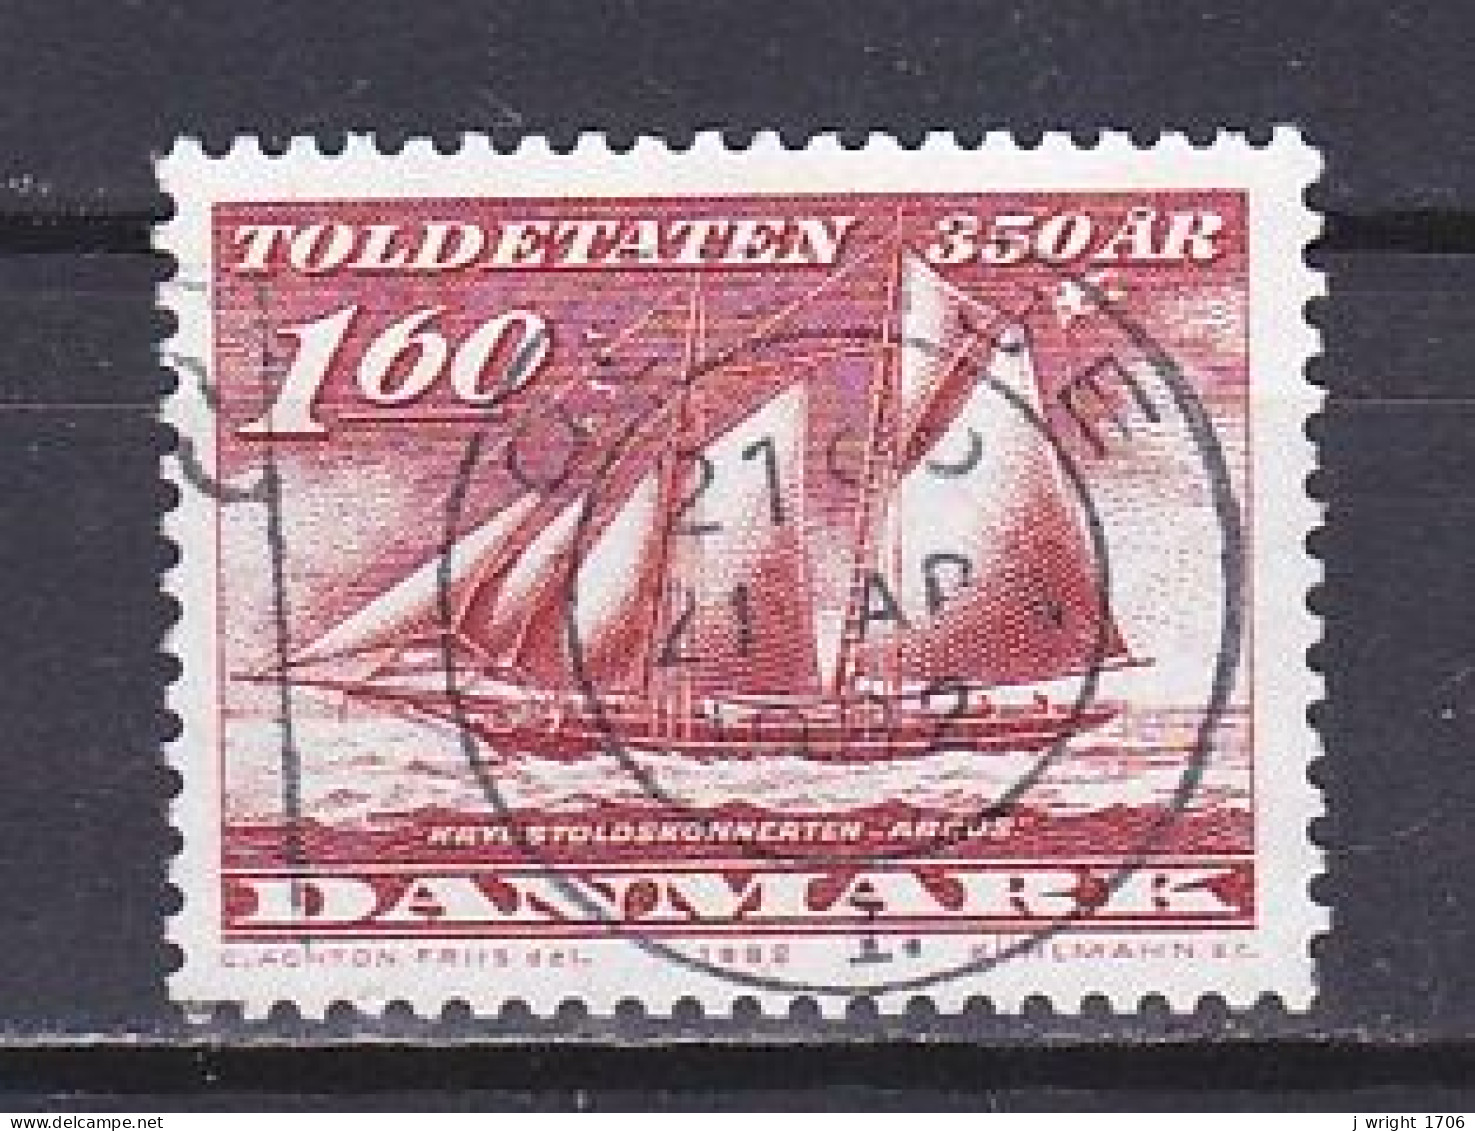 Denmark, 1982, Customs Service 350th Anniv, 1.60kr, USED - Gebraucht